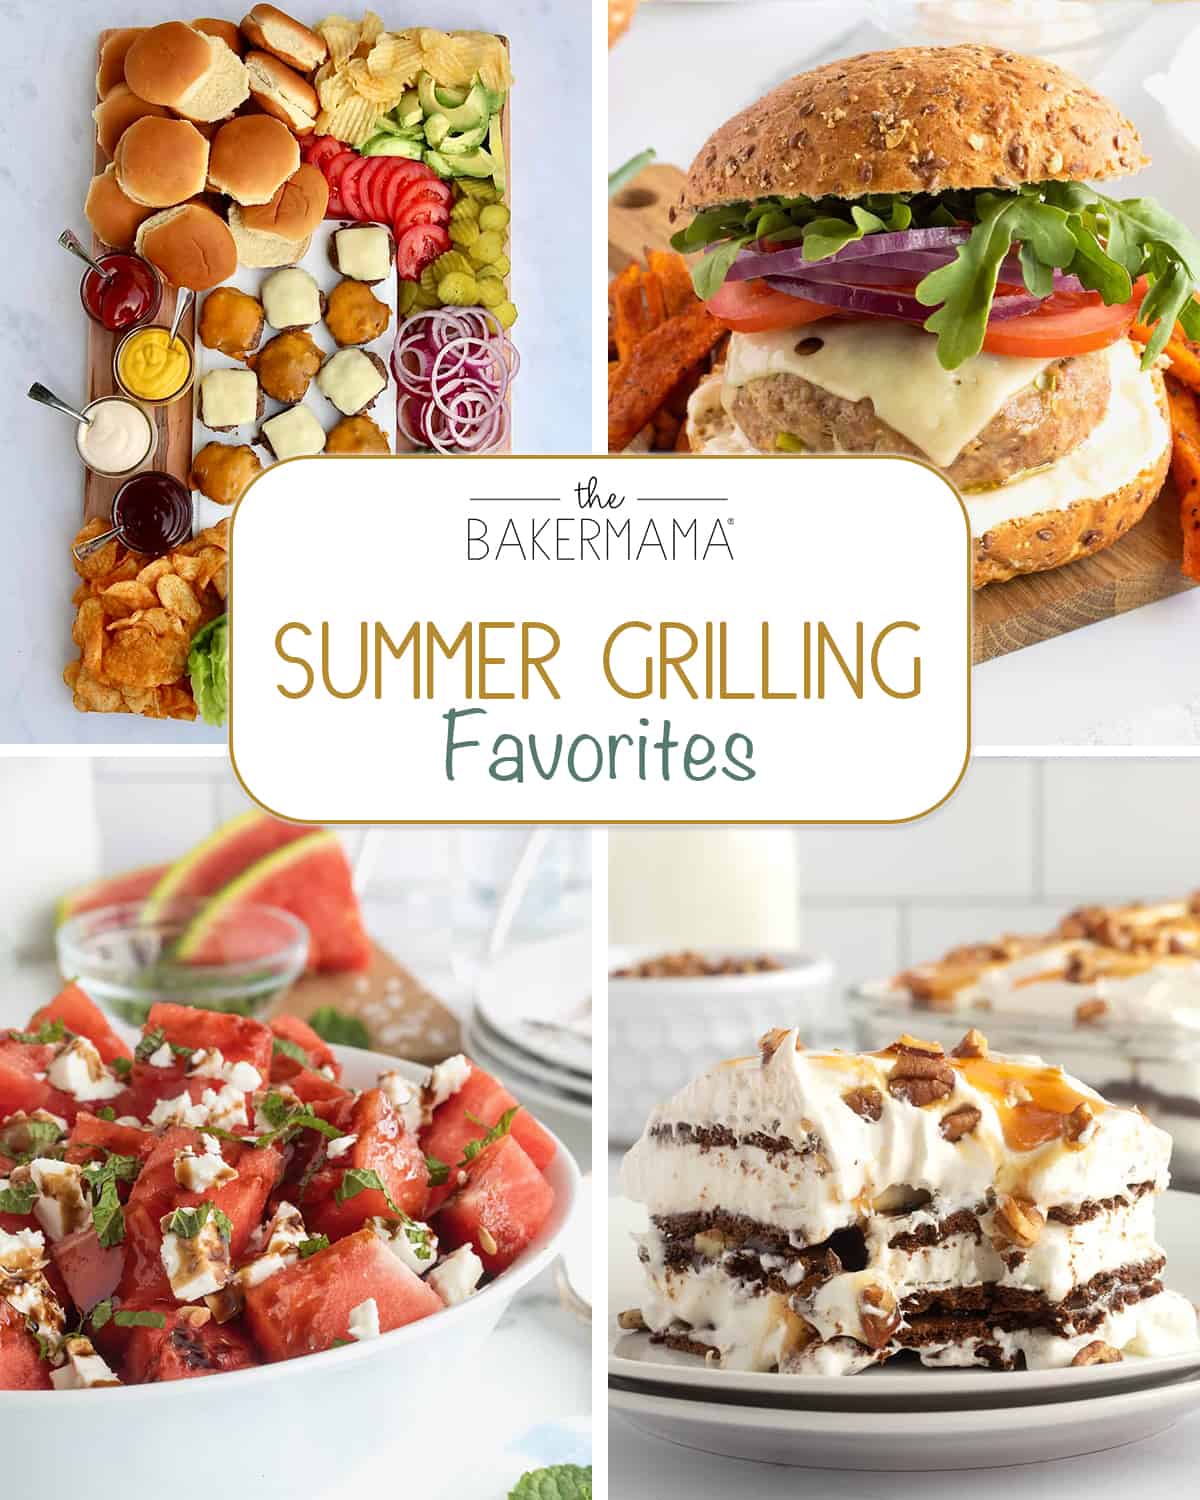 Summer Grilling Favorites by The BakerMama